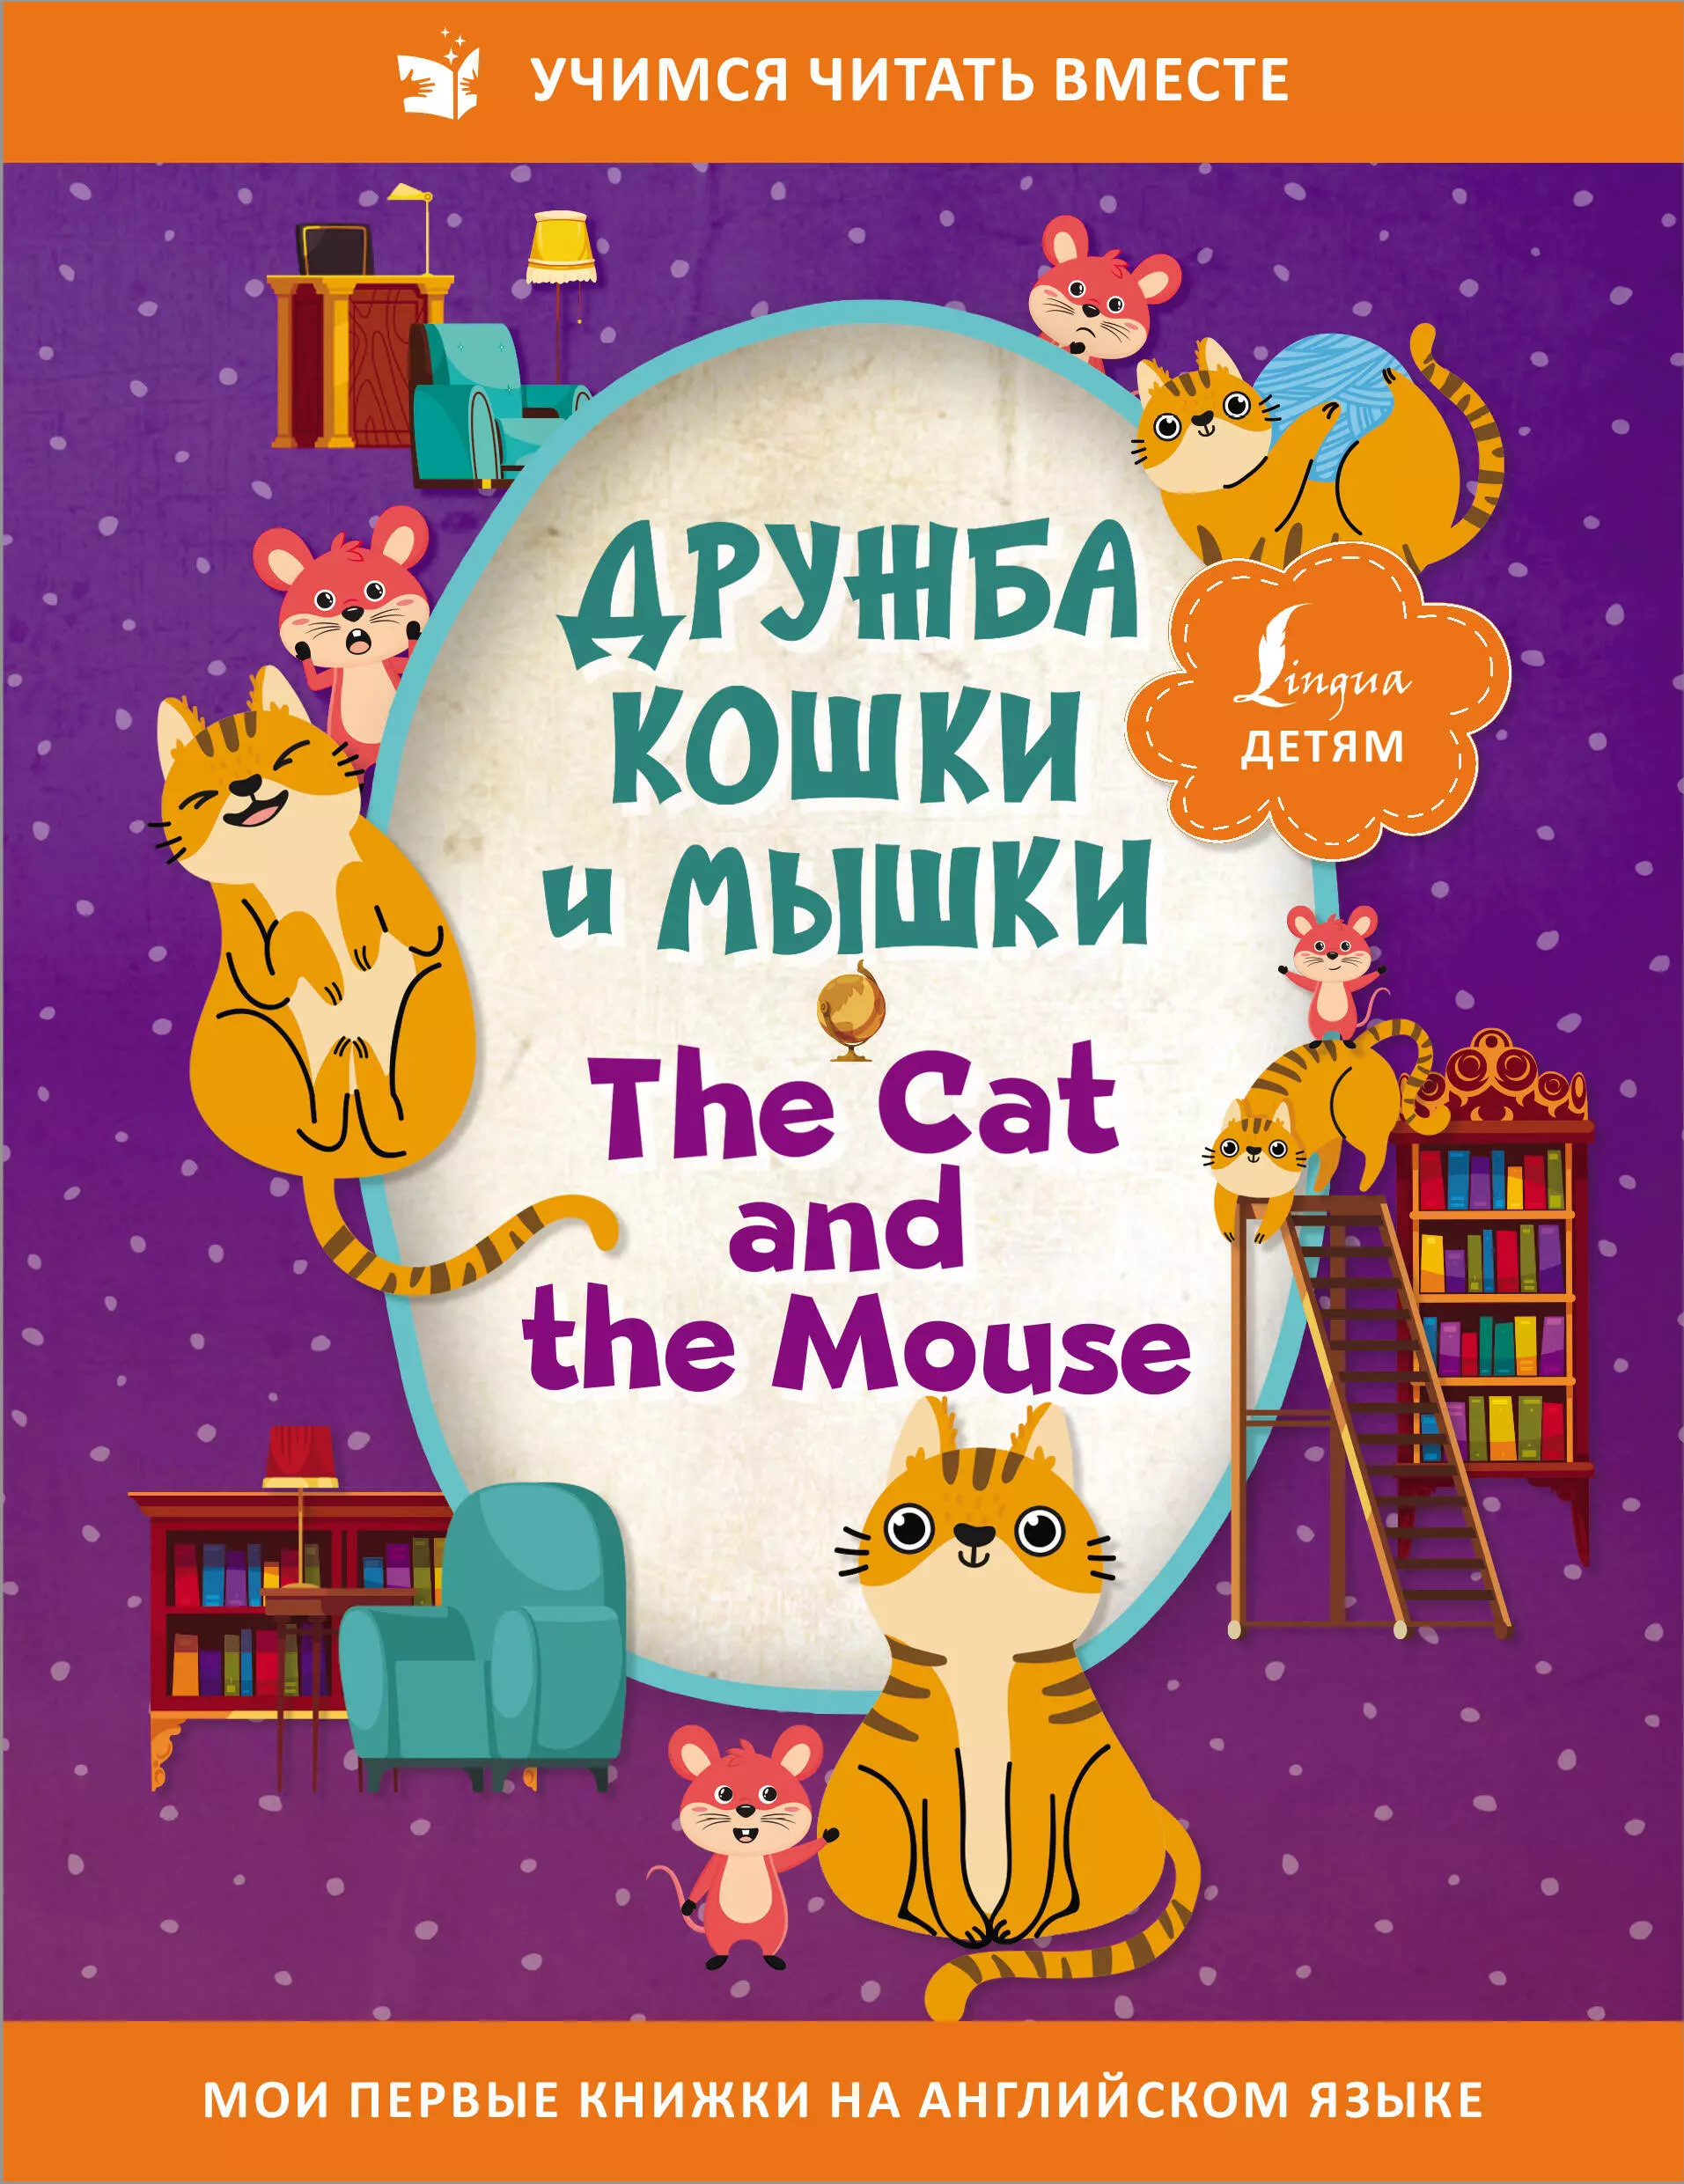 Игнатьев К. В. - Дружба кошки и мышки/ The Cat and the Mouse